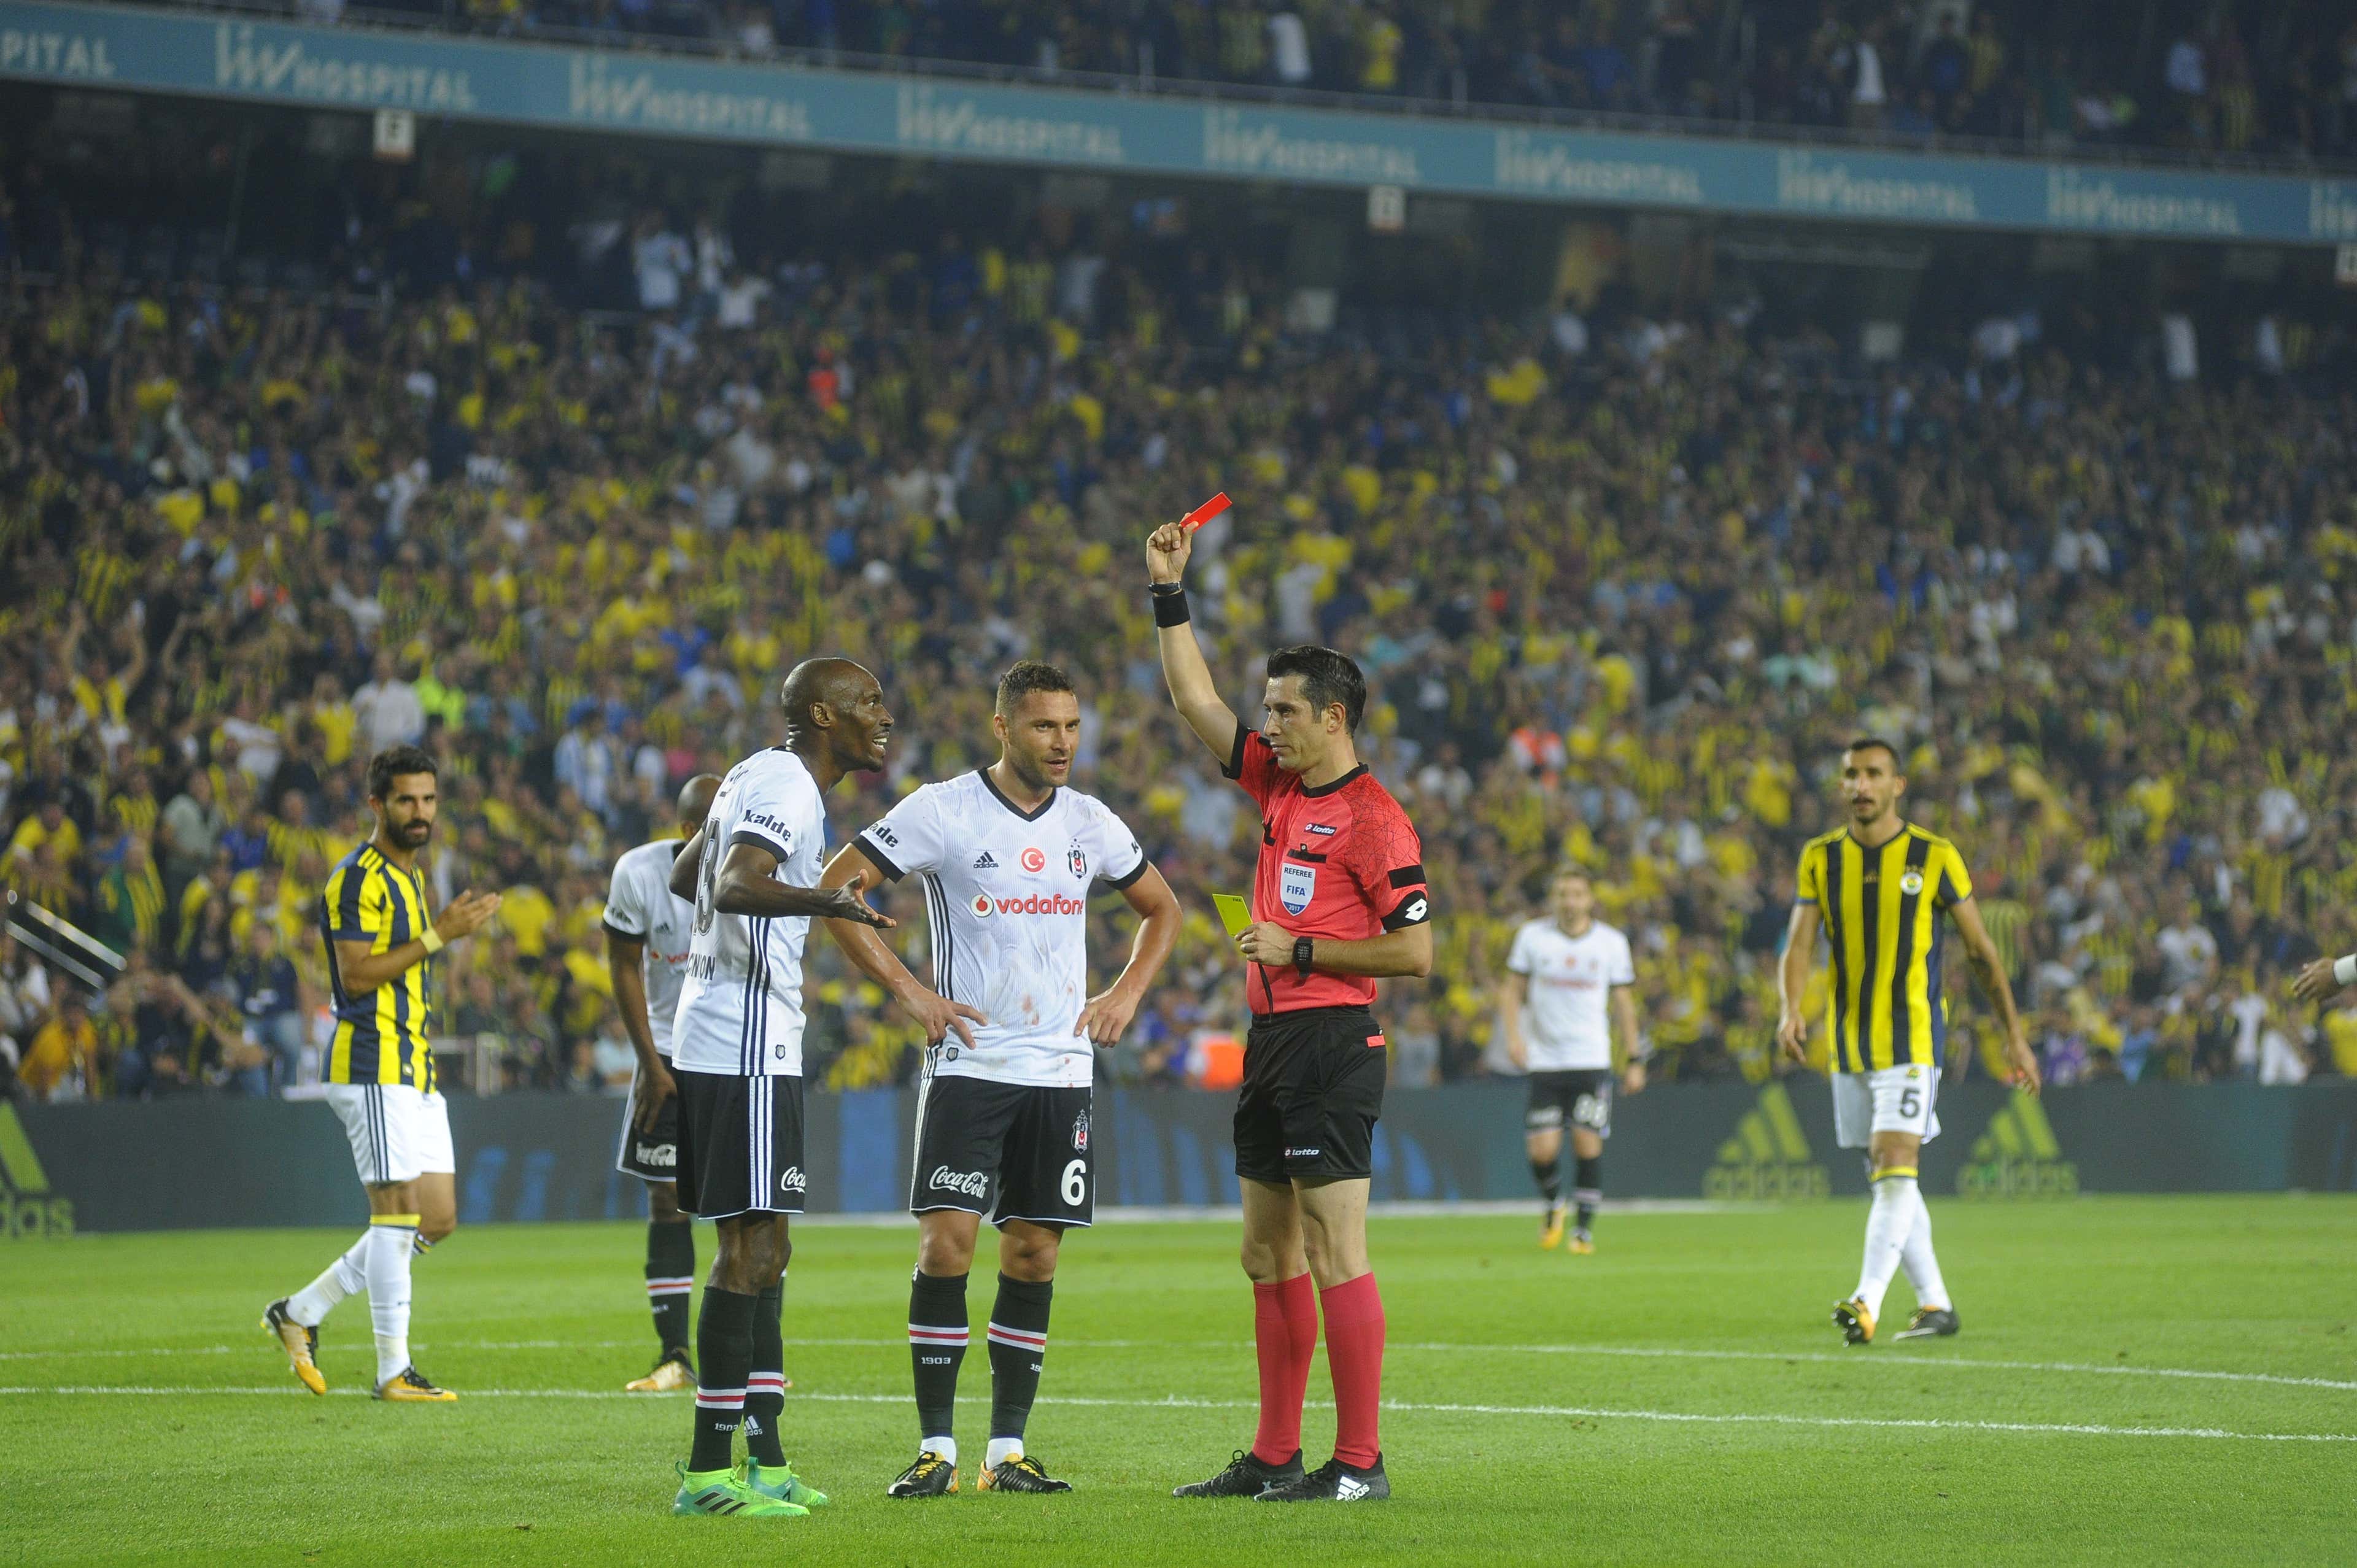 Antalyaspor vs Fenerbahçe: A Clash of Titans